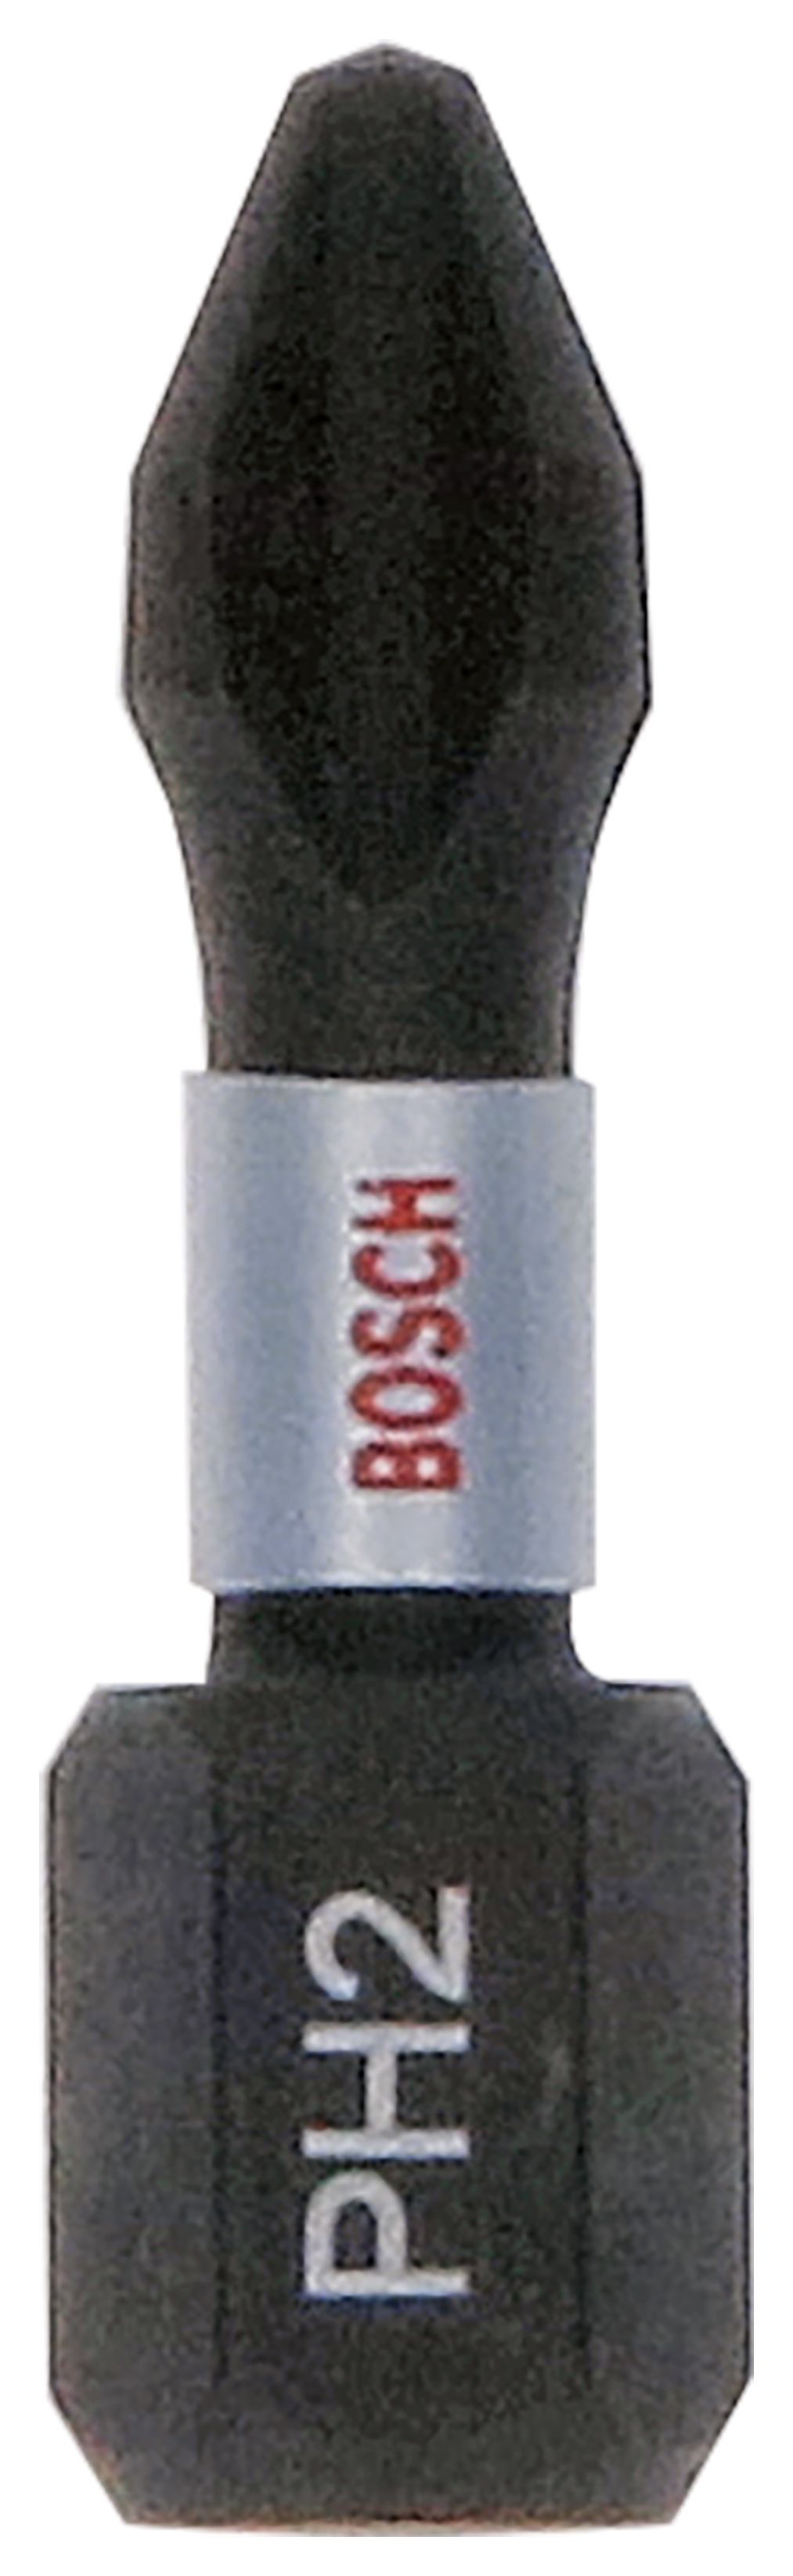 Image of Bosch 2607002803 PH2 25 Piece Impact Control TicTac Box